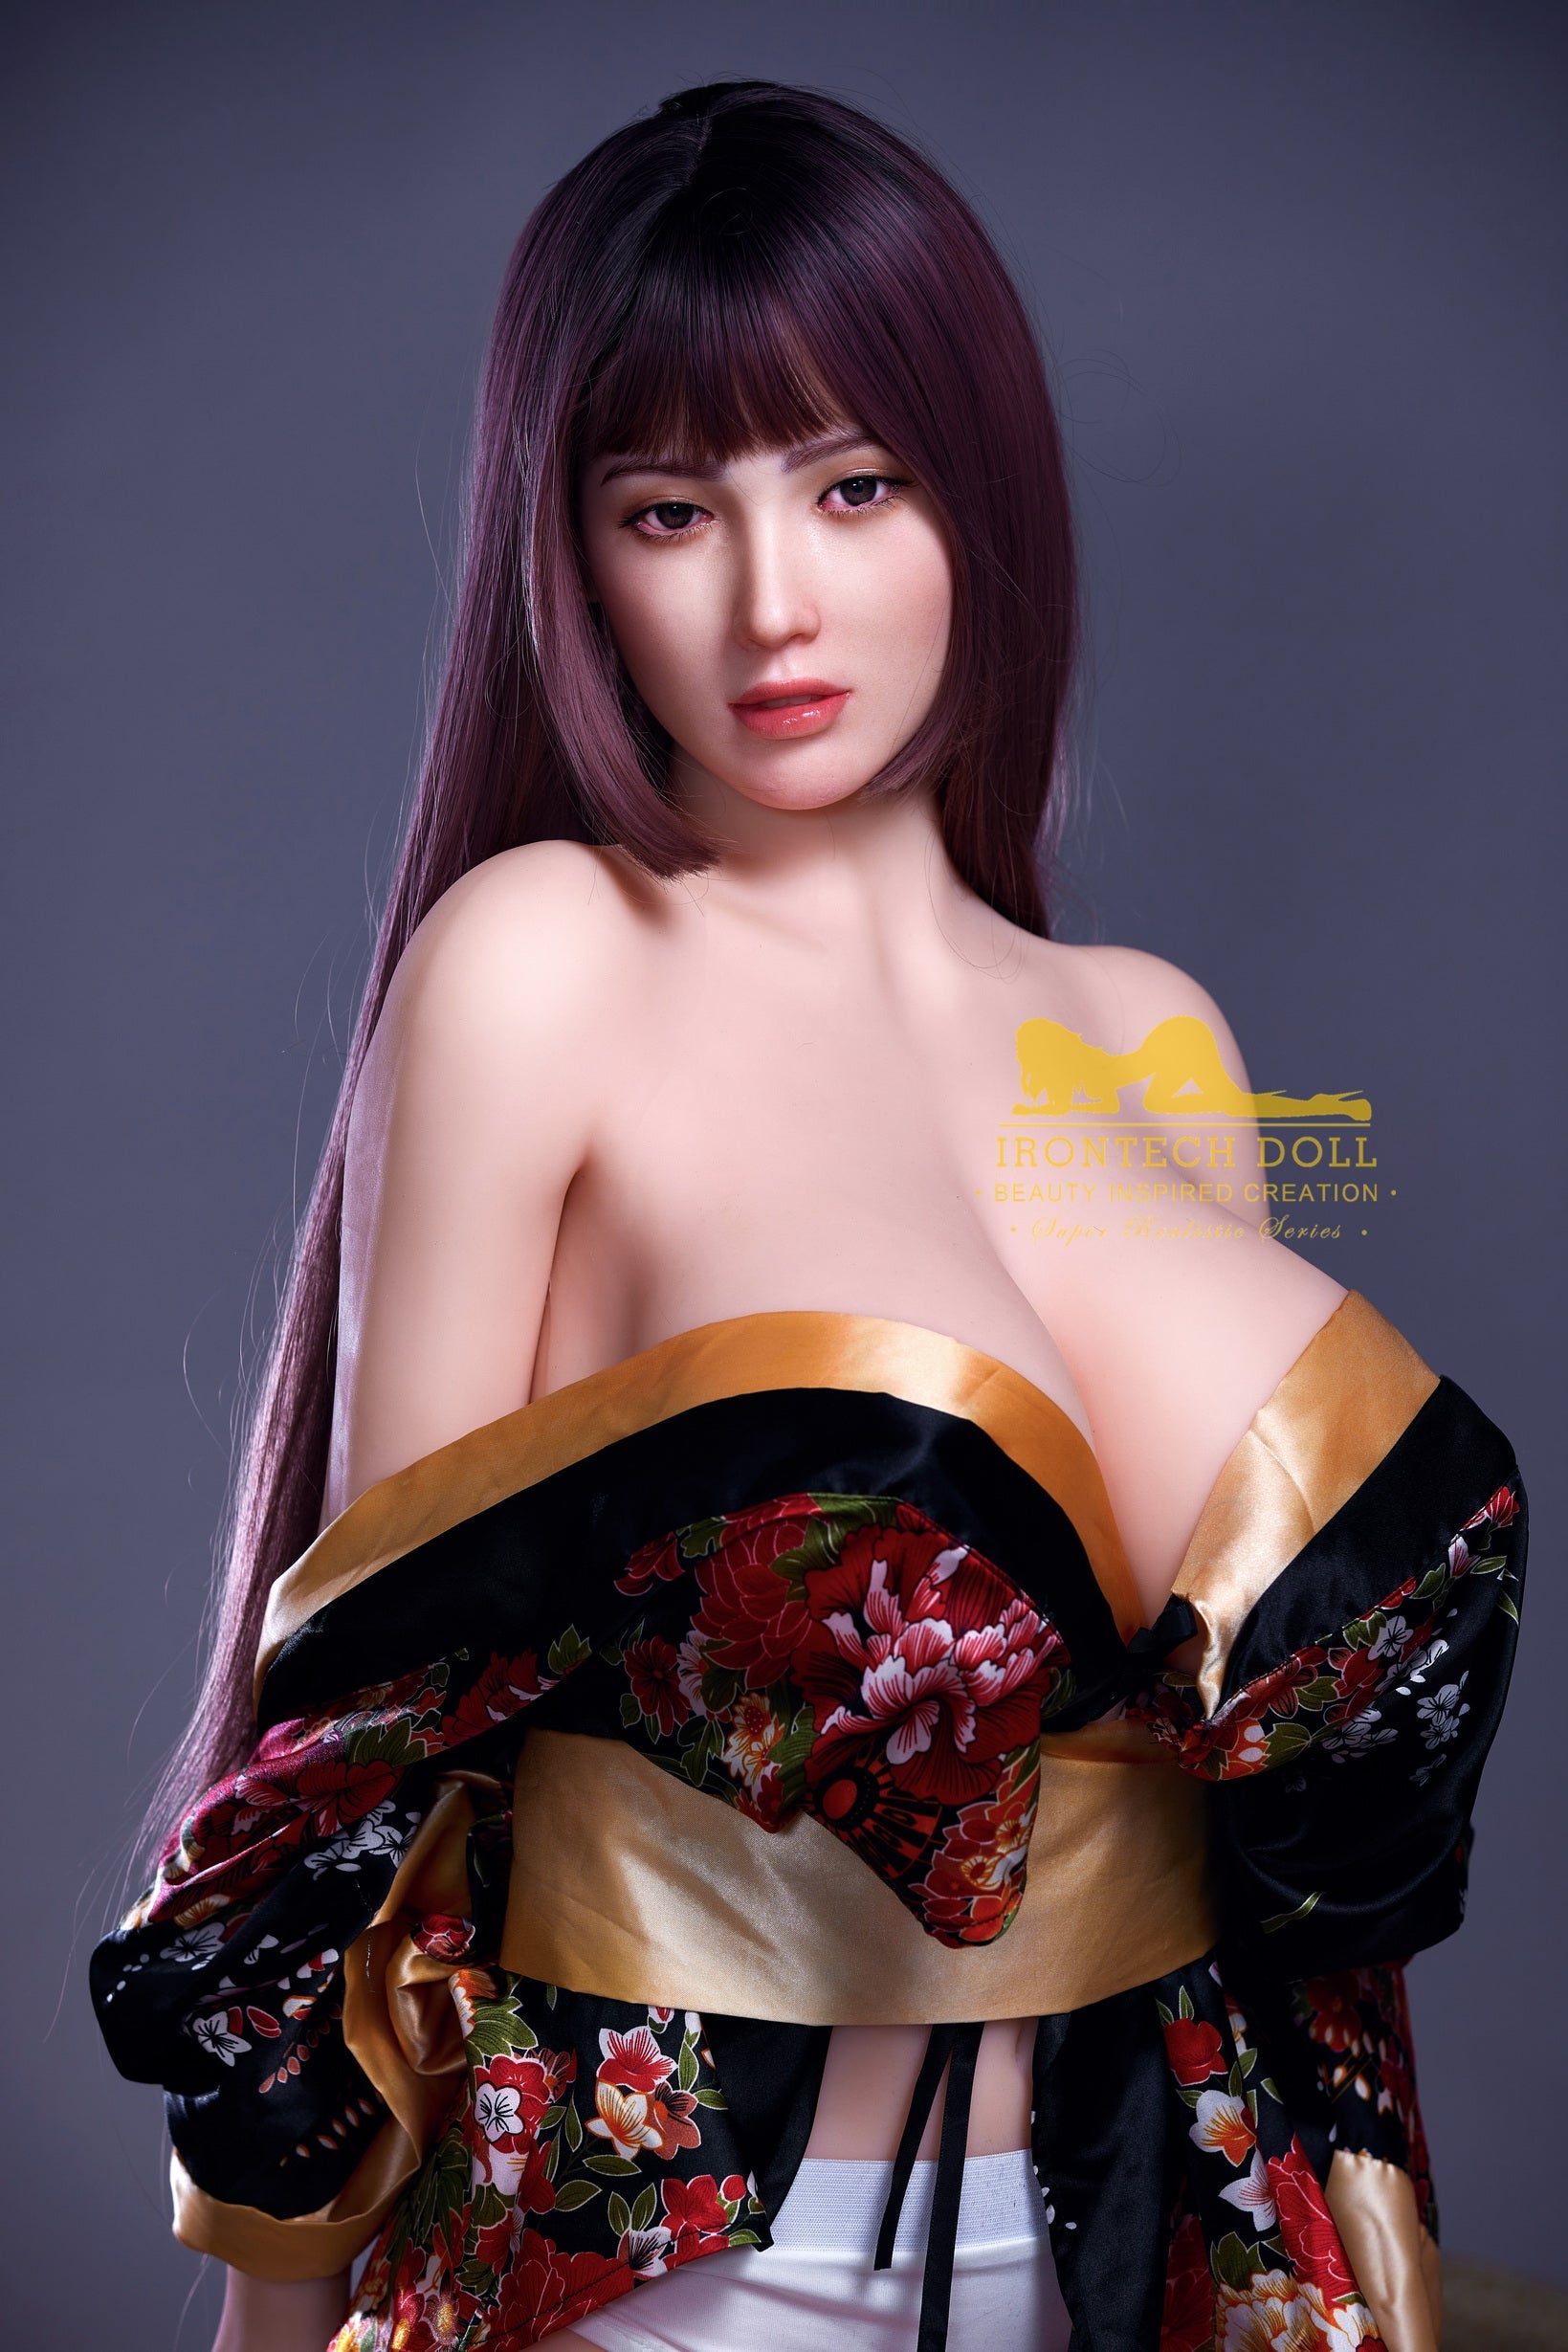 Irontech 163 cm Plus G Fusion - Miya (SG) | Buy Sex Dolls at DOLLS ACTUALLY